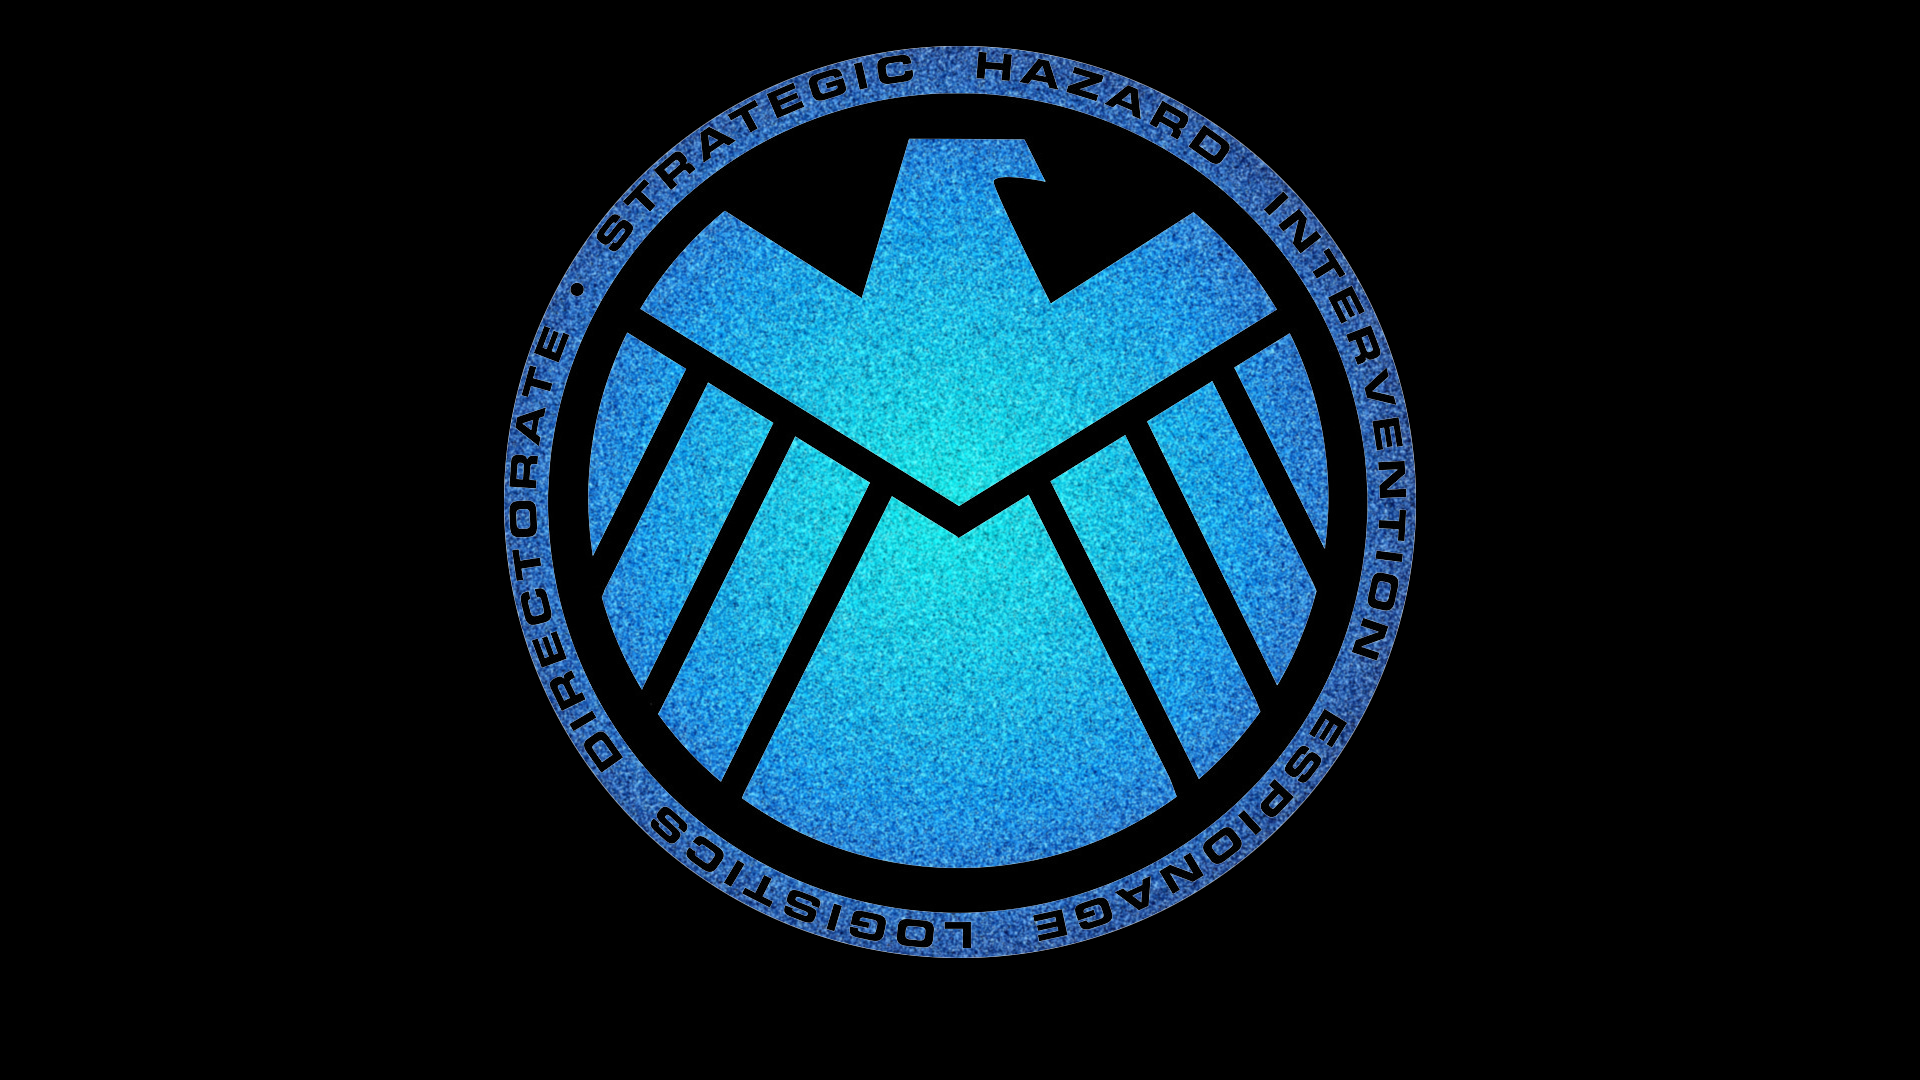 Avengers Shield Logo Wallpaper Avengers shiel